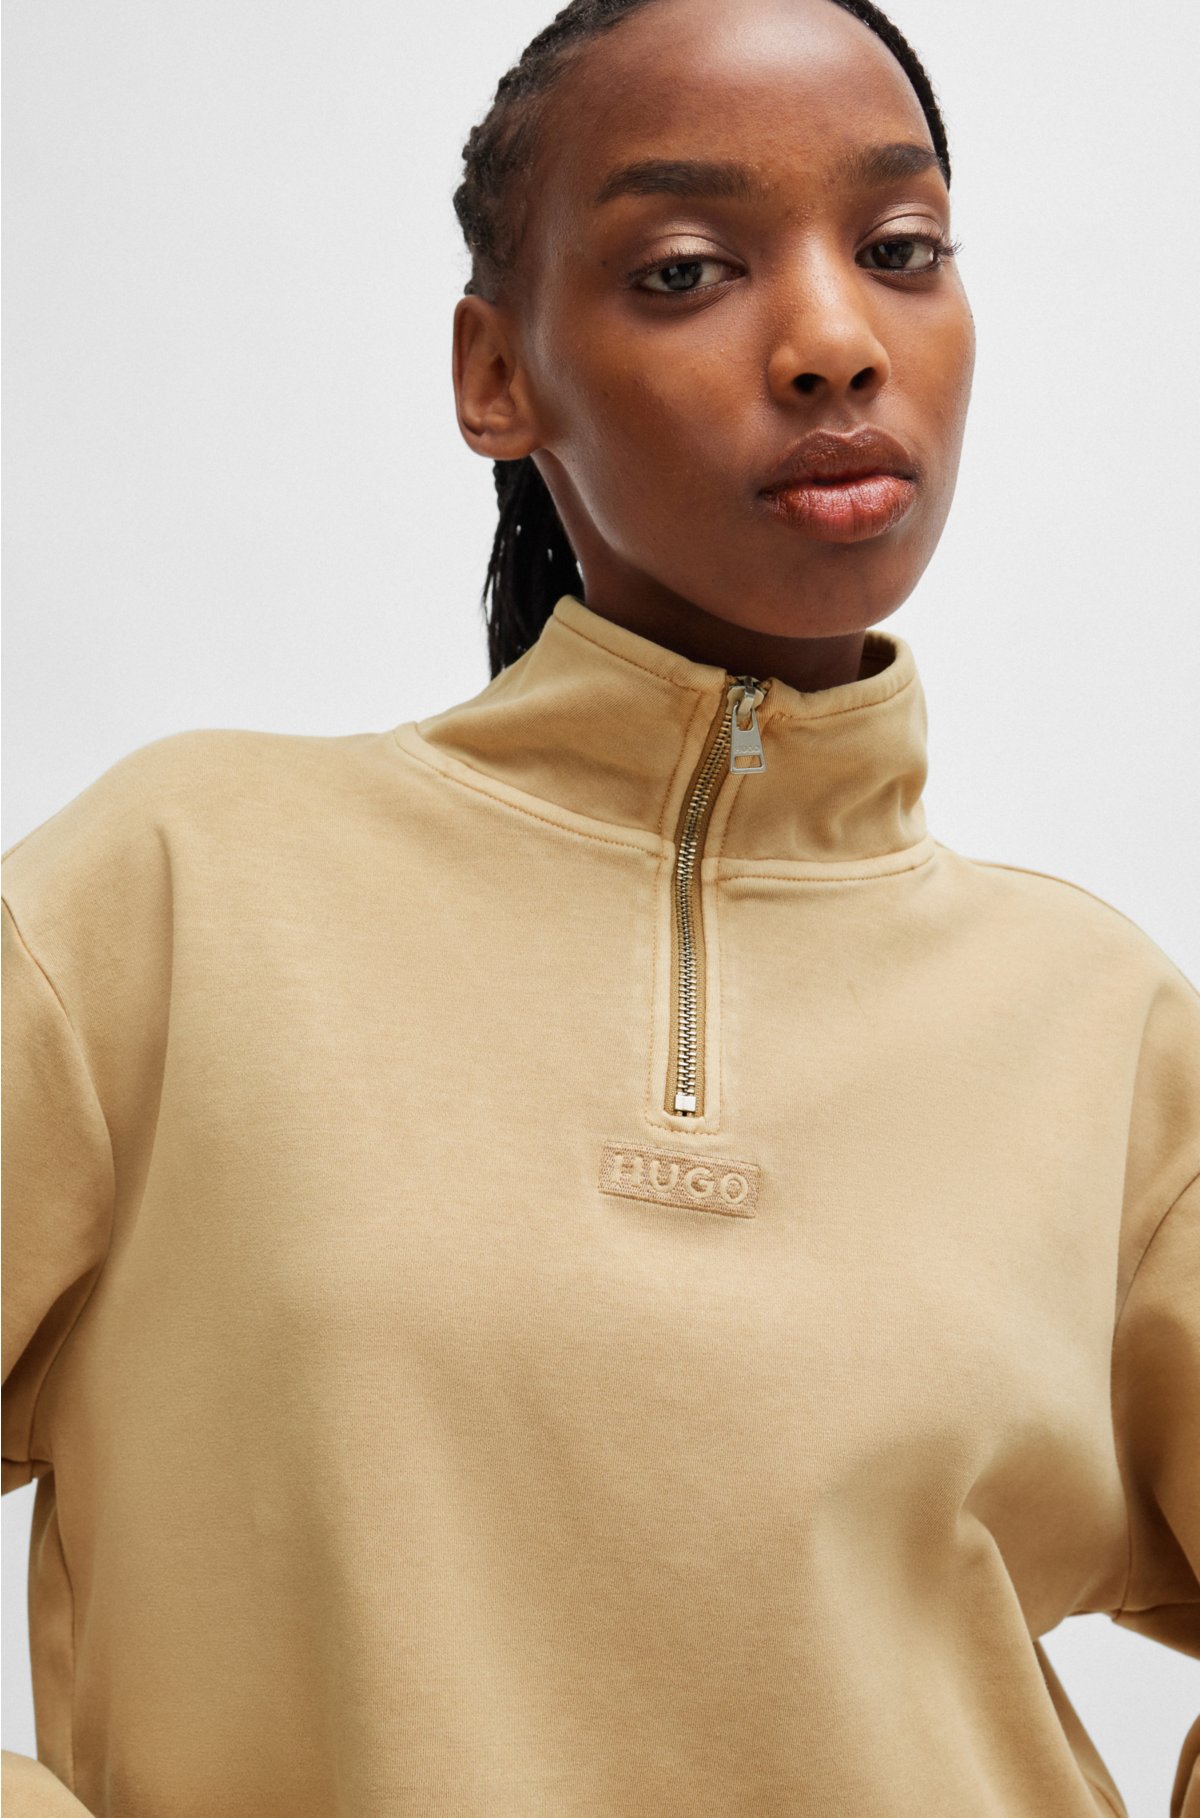 Relaxed-fit cropped sweatshirt with zip neckline, Beige